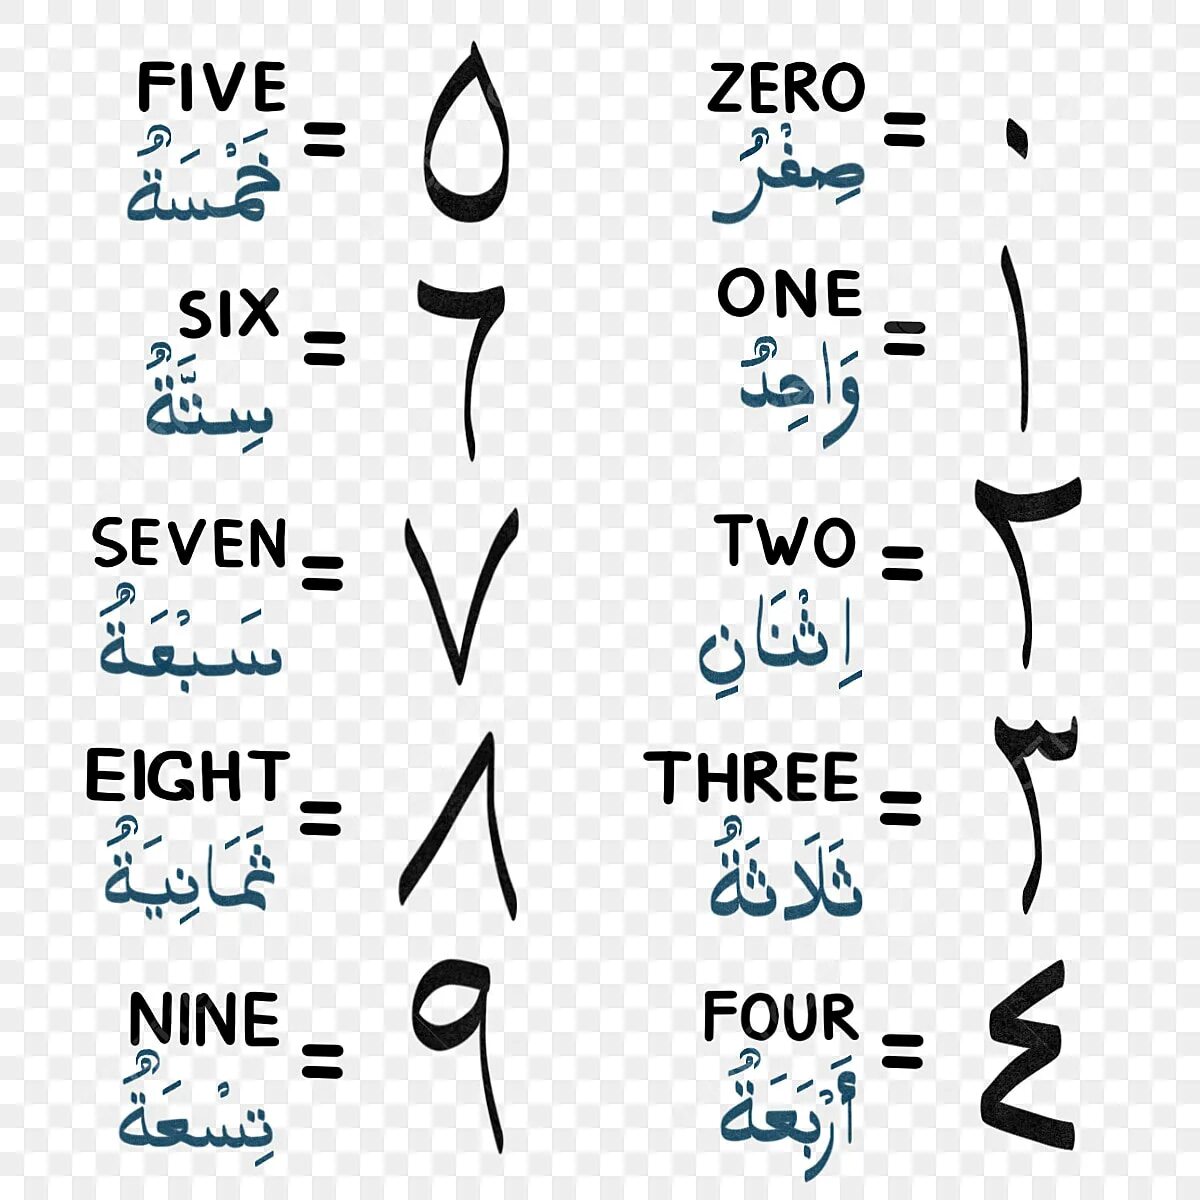 100 на арабском. Арабские числа. Цифры на арабском языке. Арабские цифры на арабском. Цифры по арабски от 0 до 10.